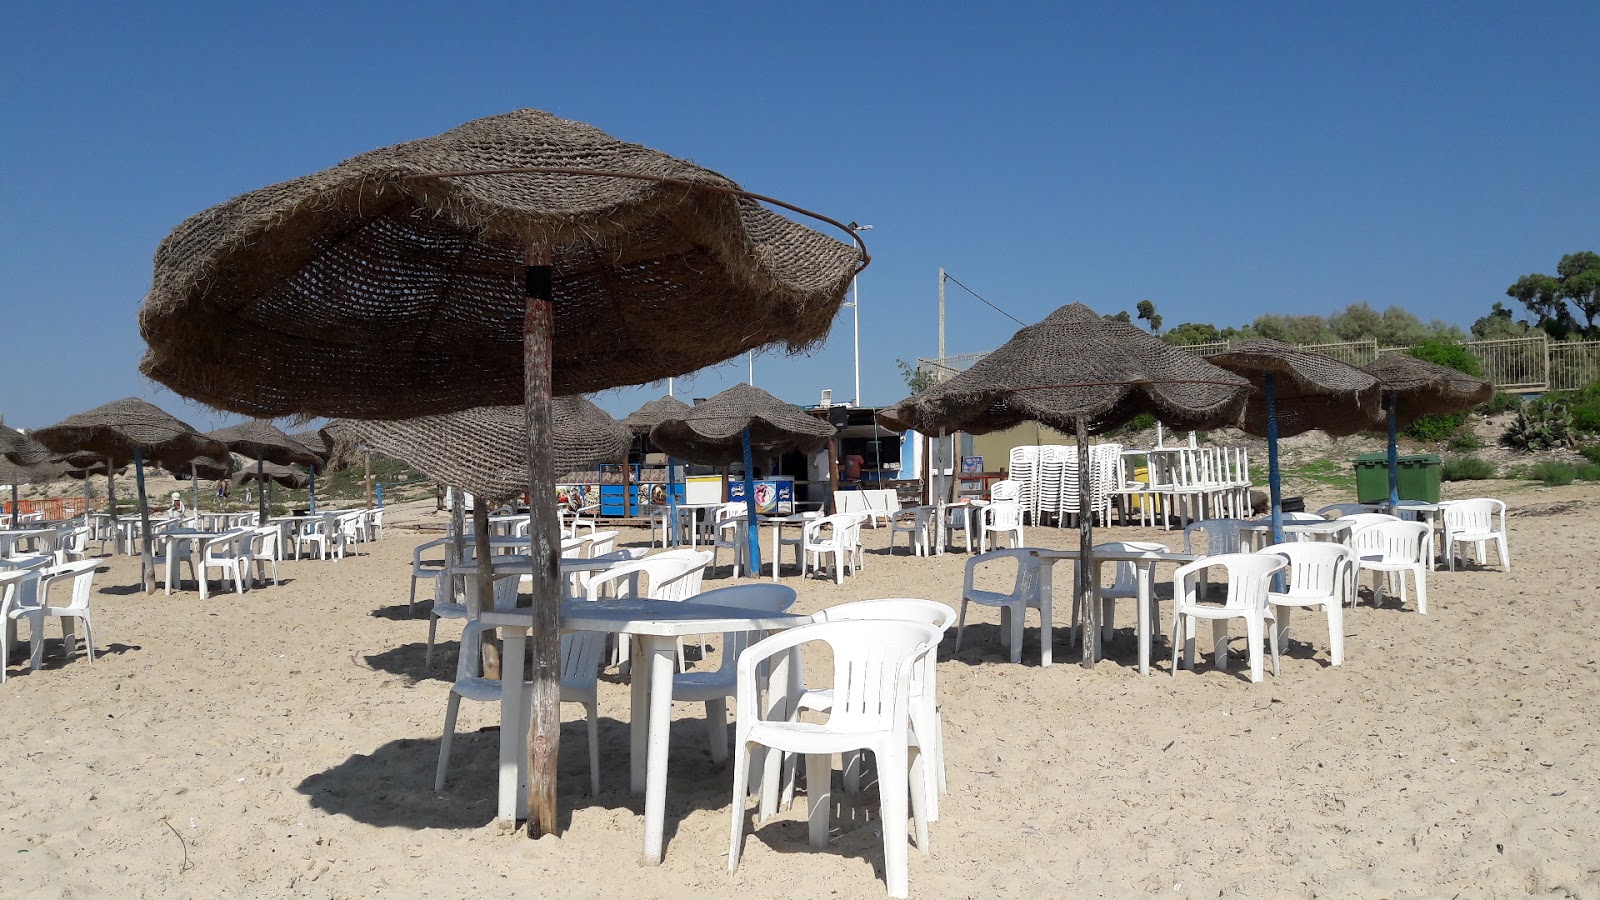 Foto de Plage Sidi Mahrsi - lugar popular entre os apreciadores de relaxamento